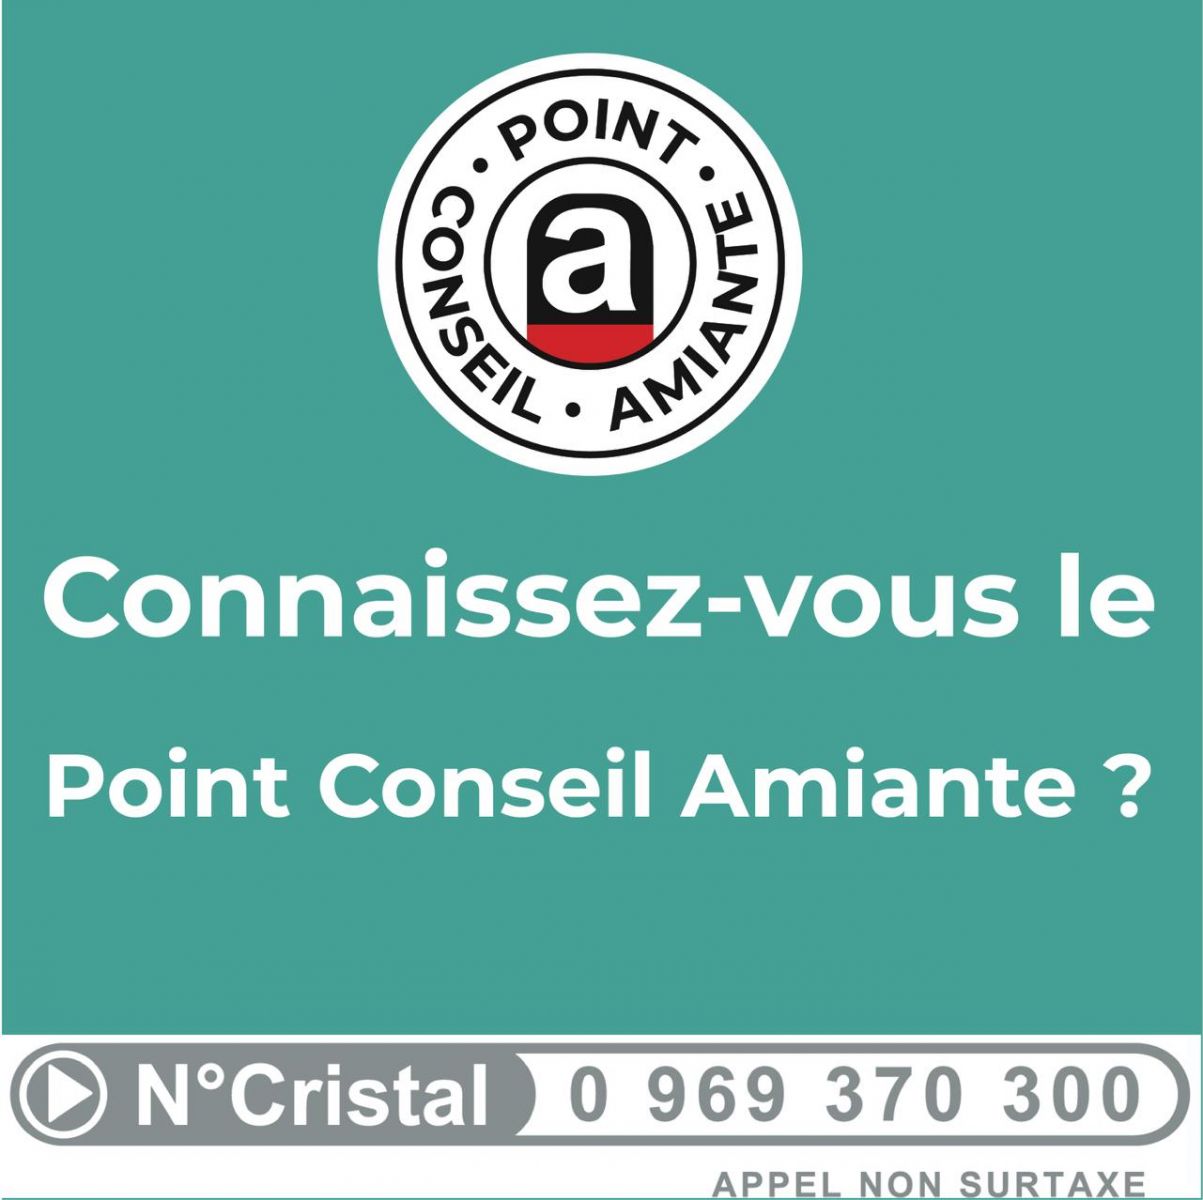 EX'IM France 🏠🇫🇷 lance PCA (Point Conseil Amiante)